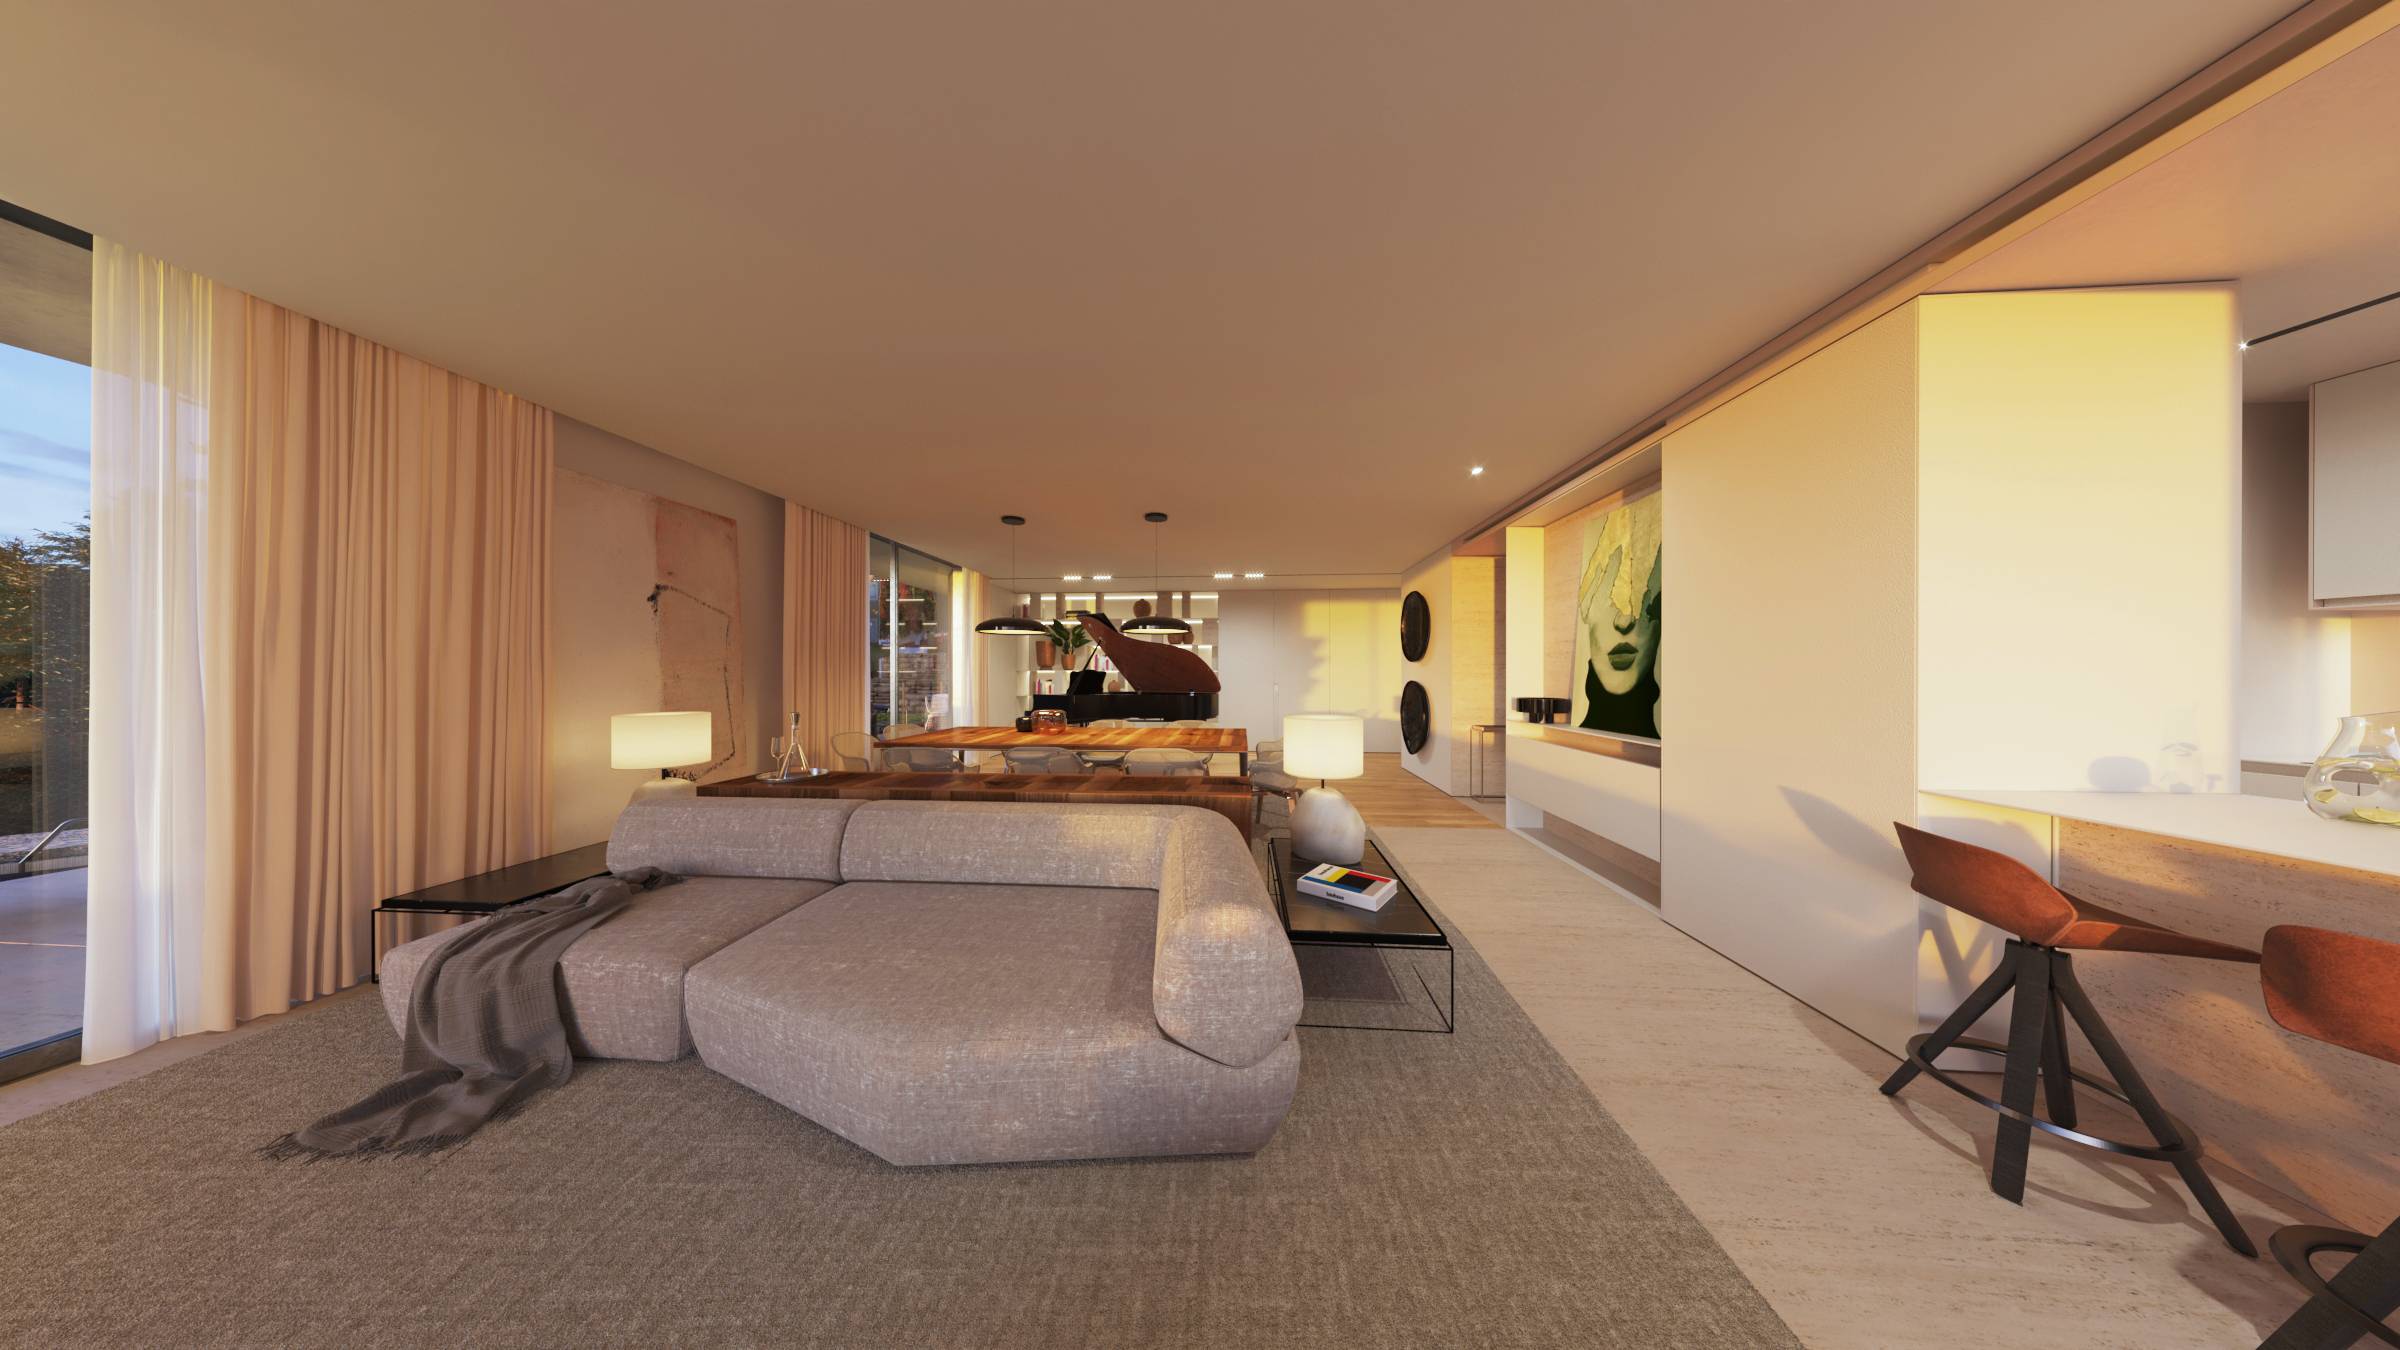 Savoy Monumentalis - Luxury 4 Bedroom Ocean Front Apartments- Funchal - Madeira Island